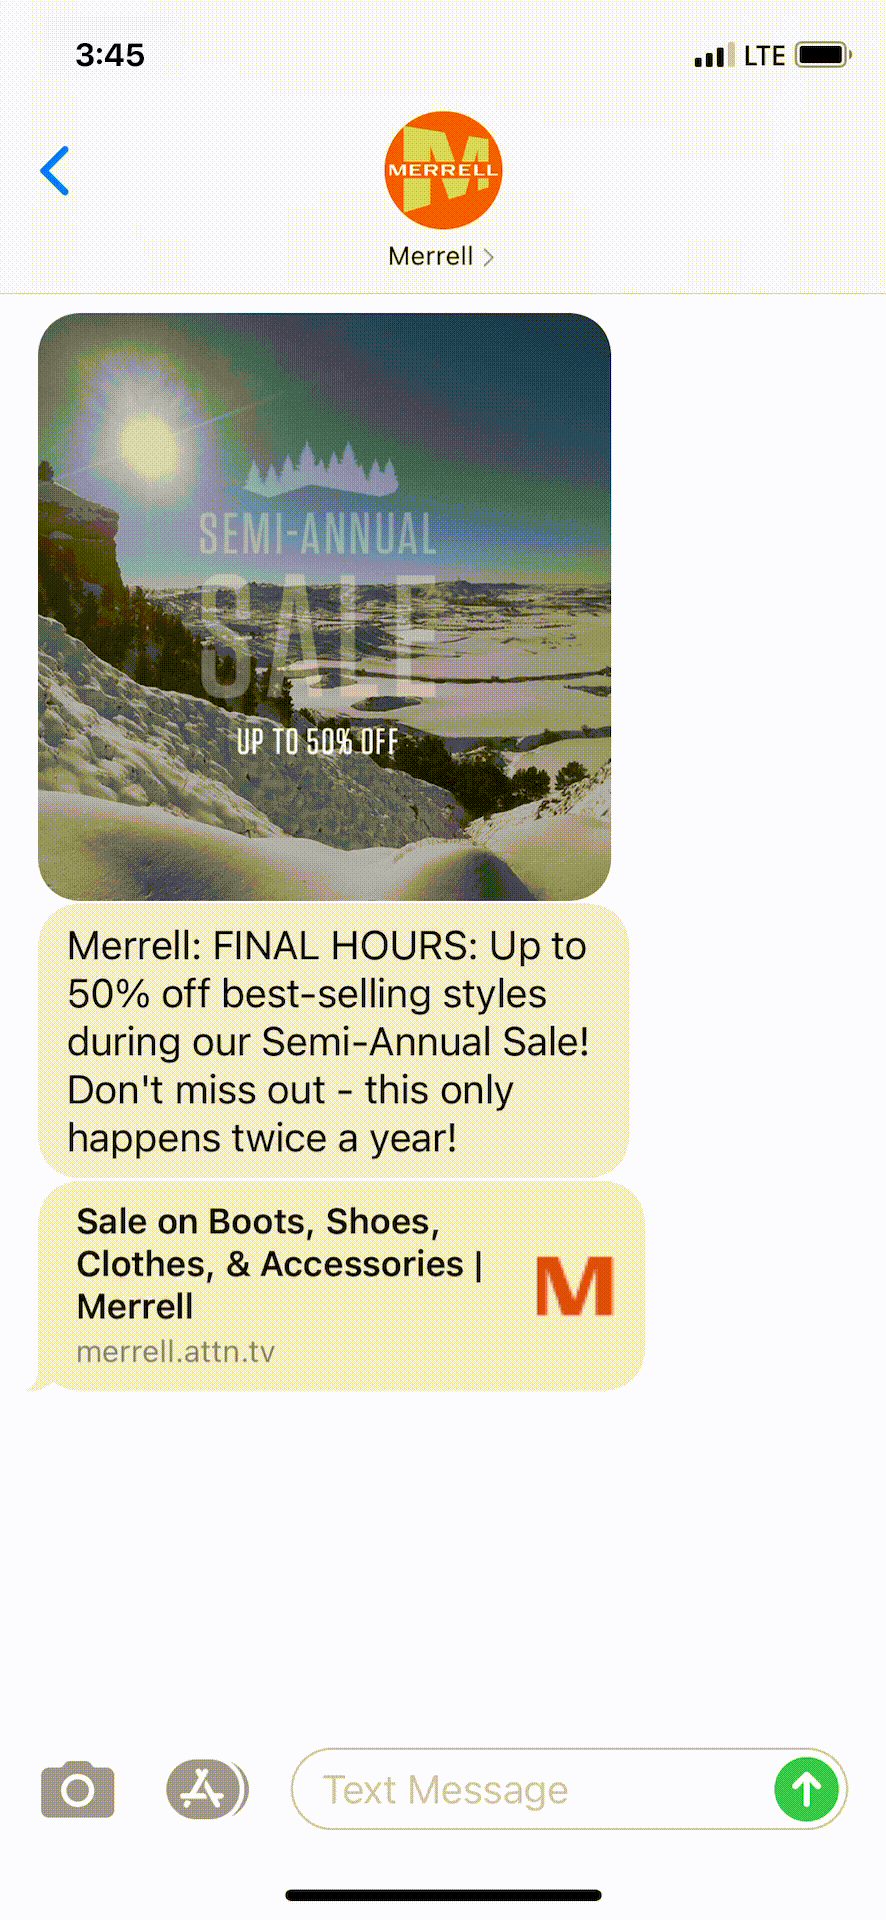 Merrell-Text-Message-Marketing-Example-02.24.2021